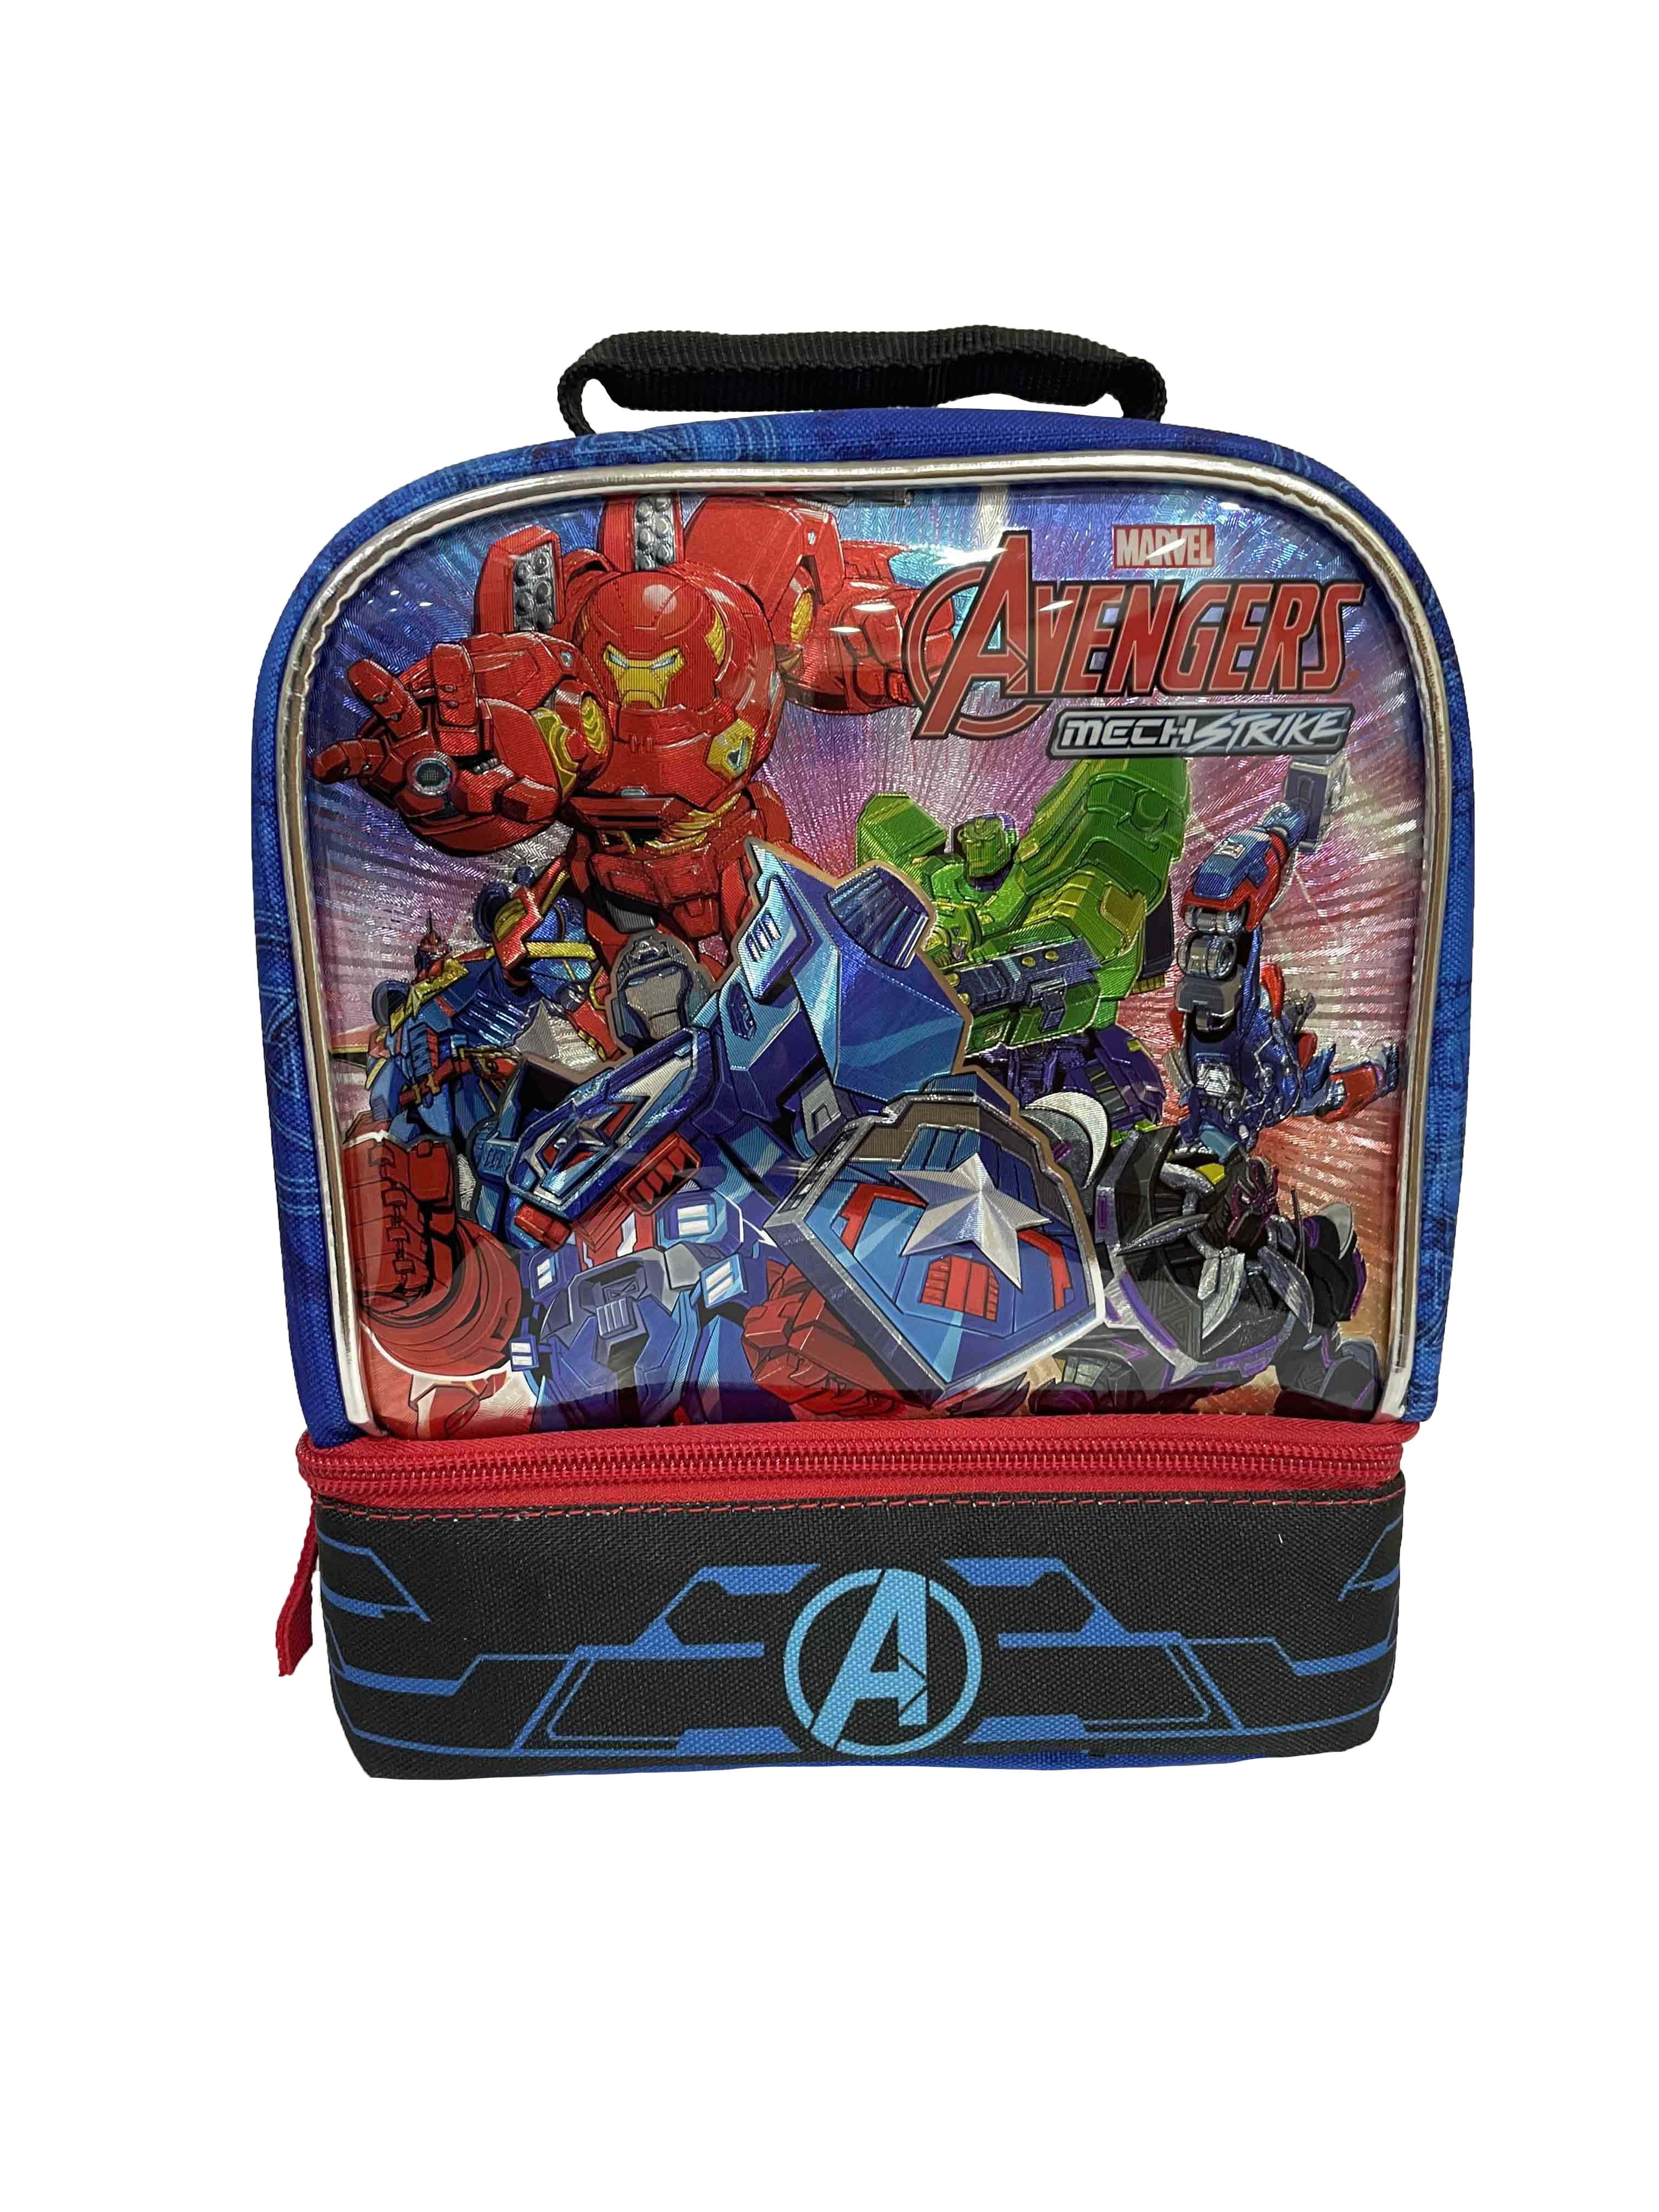 Marvel Avengers 8 Inch Kids Lunch Bag Multicolor Lunch Bag for Boys